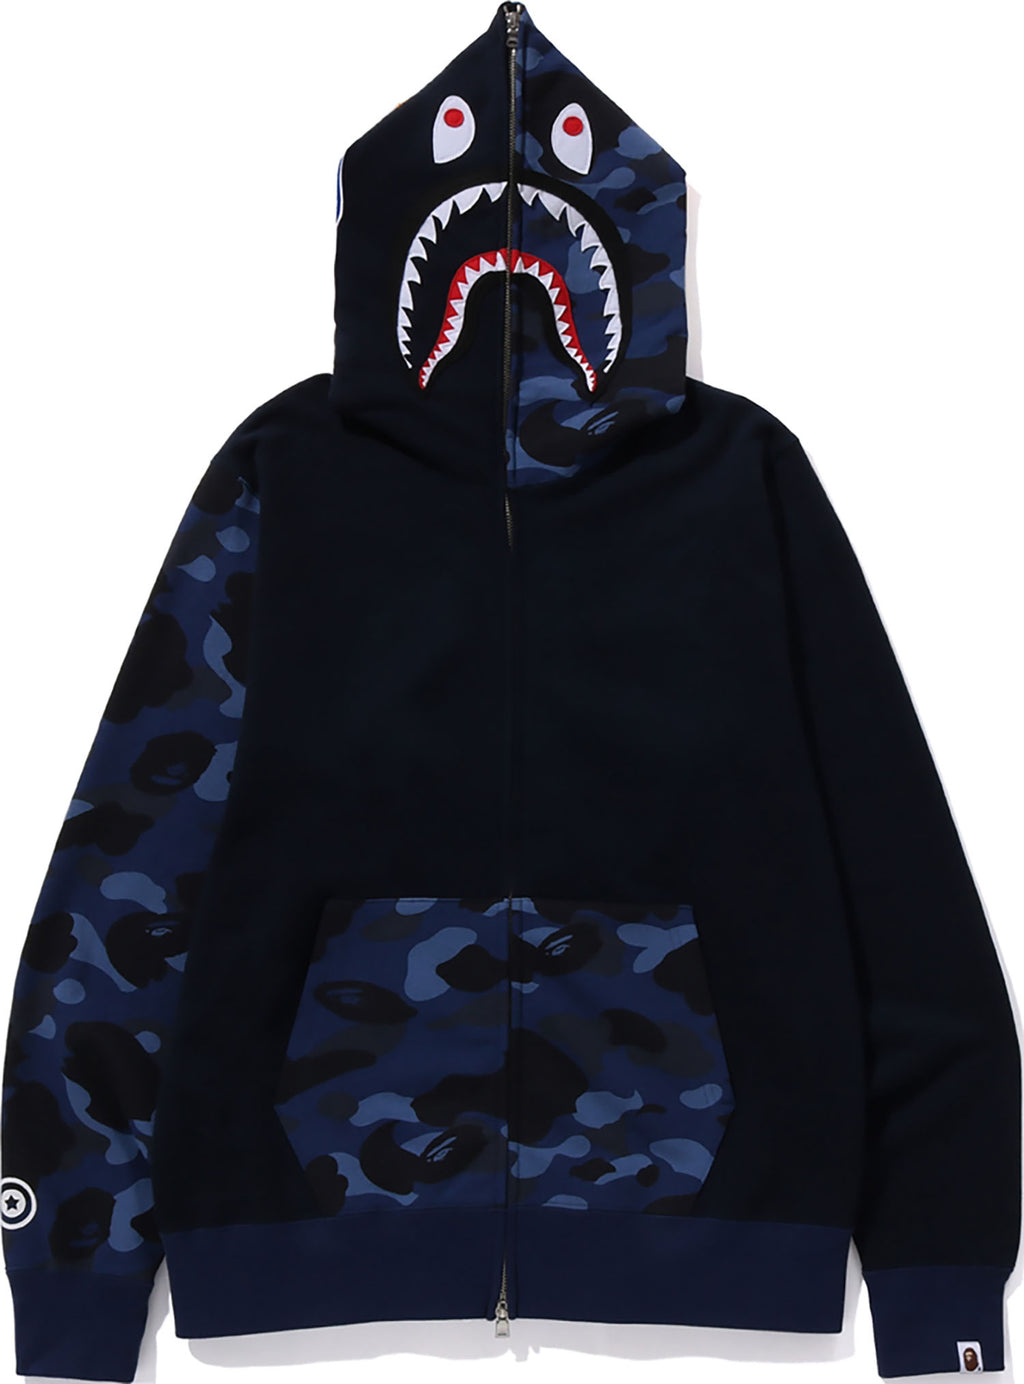 BAPE Shark Cotton Hoodie Street Fashion Camouflage Double Hooded  Jacket,CAMO Red 